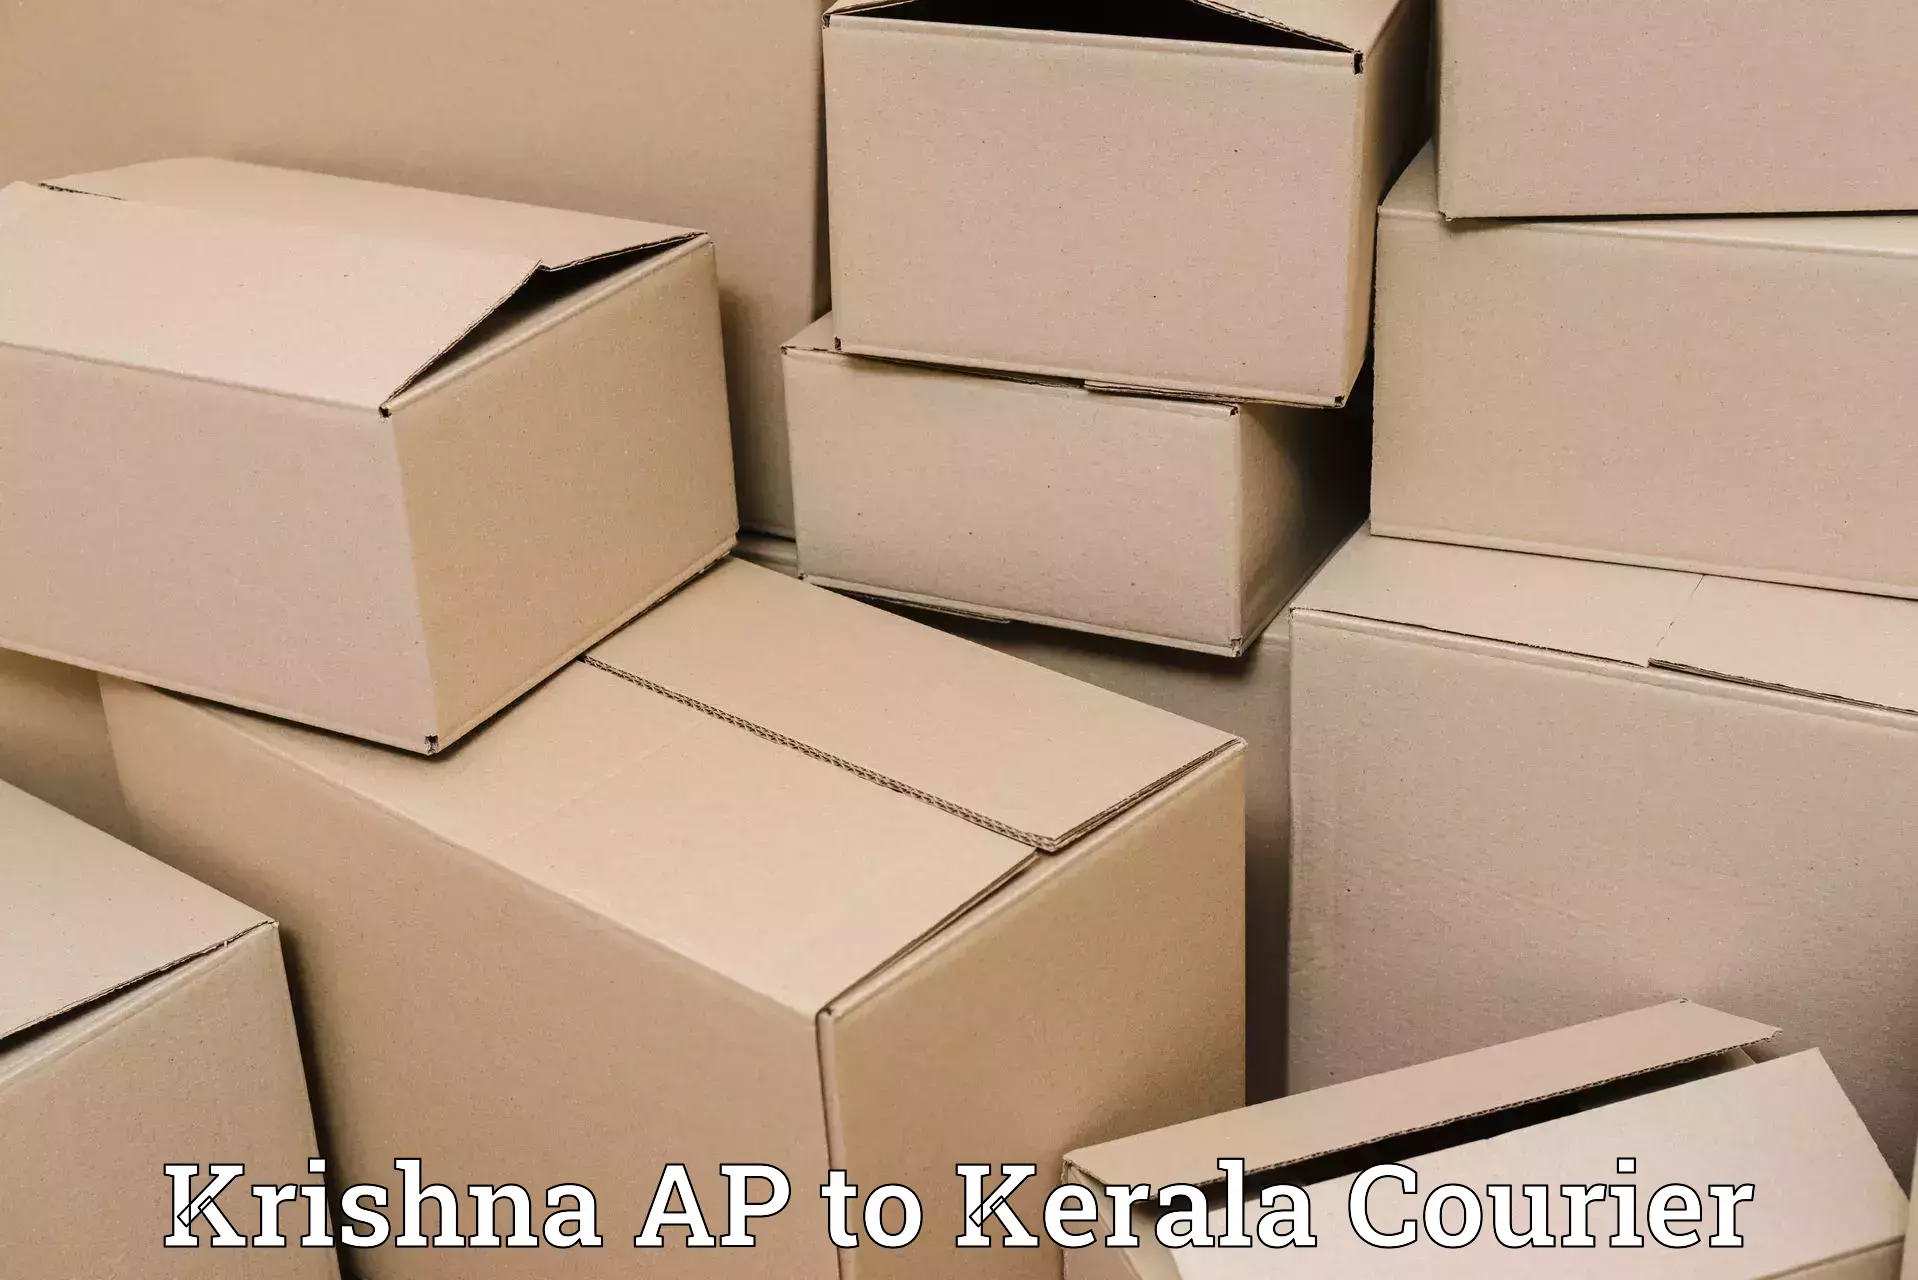 Digital courier platforms Krishna AP to Cochin Port Kochi